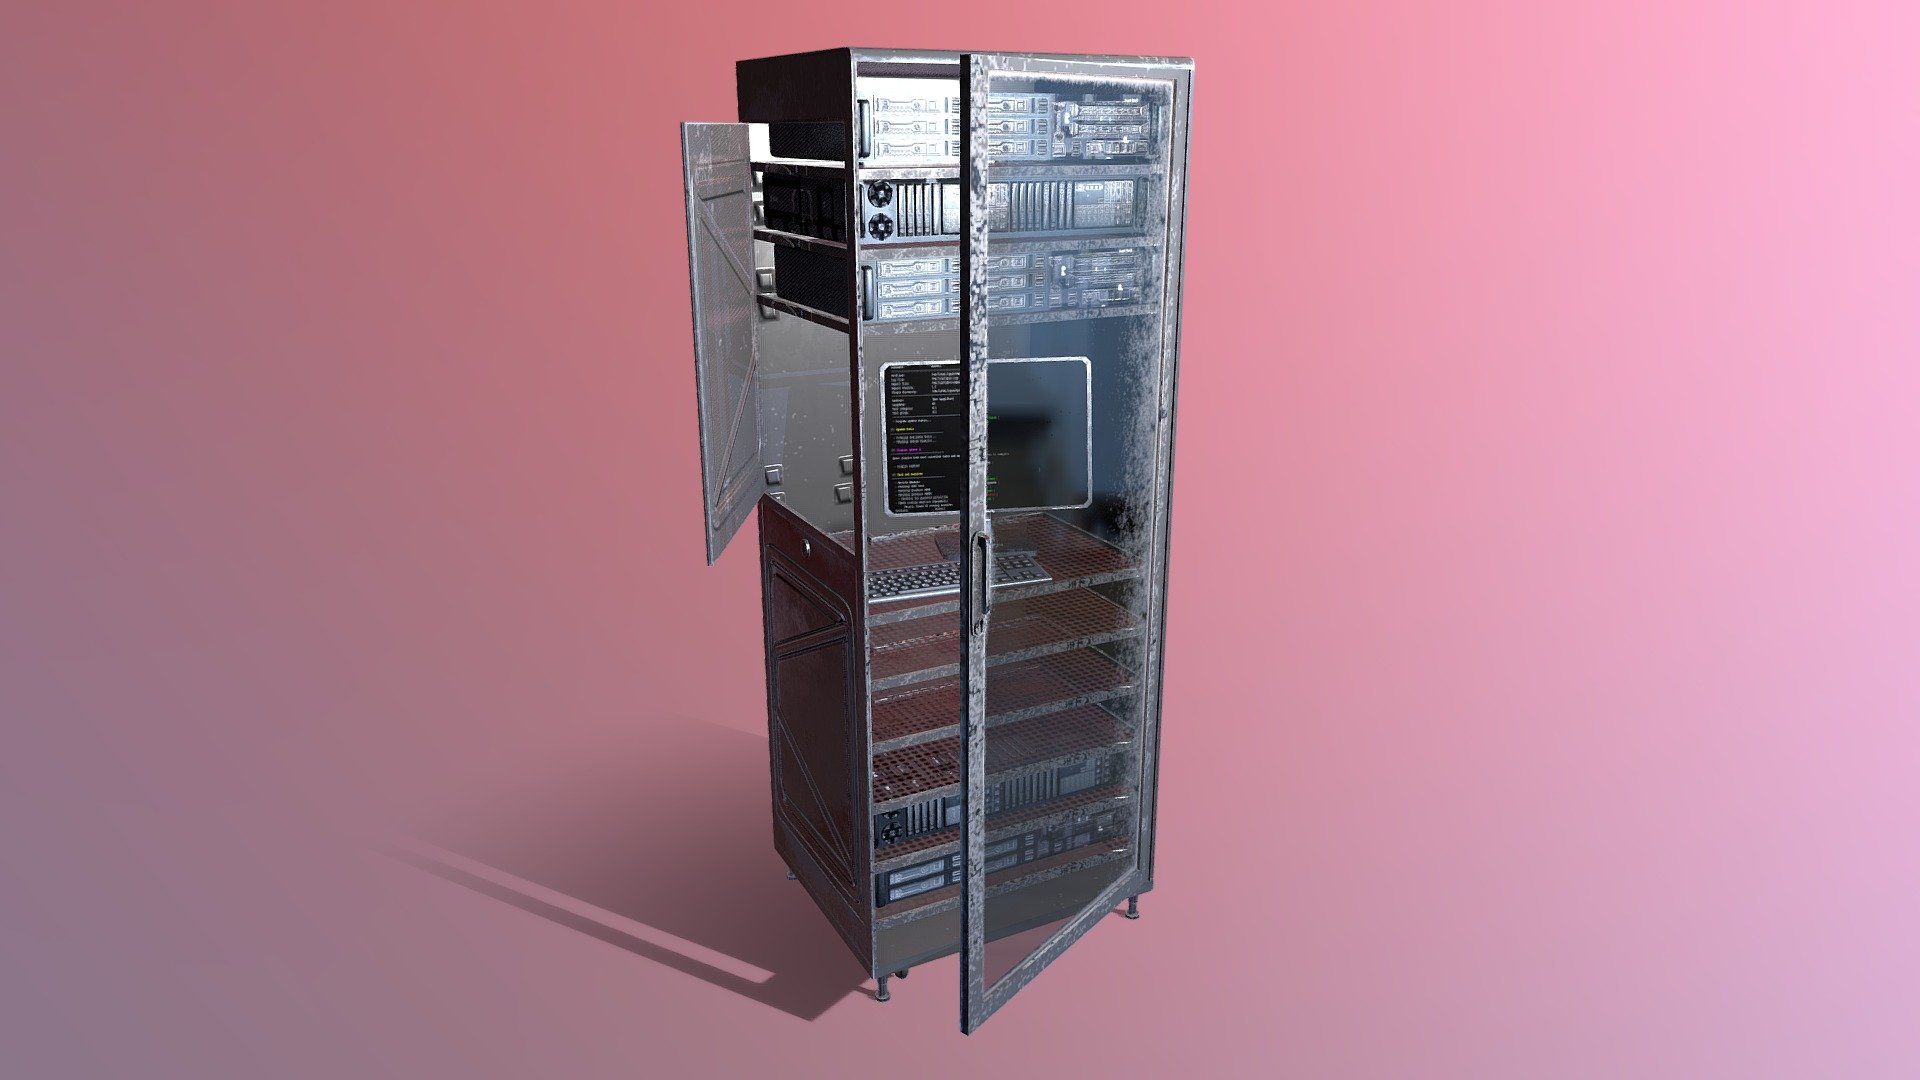 just server that makes adsl modem sounds. beeeeeee booowb skchhhhhhhhhhhh :D - Server box - Download Free 3D model by sanyaork 3d model